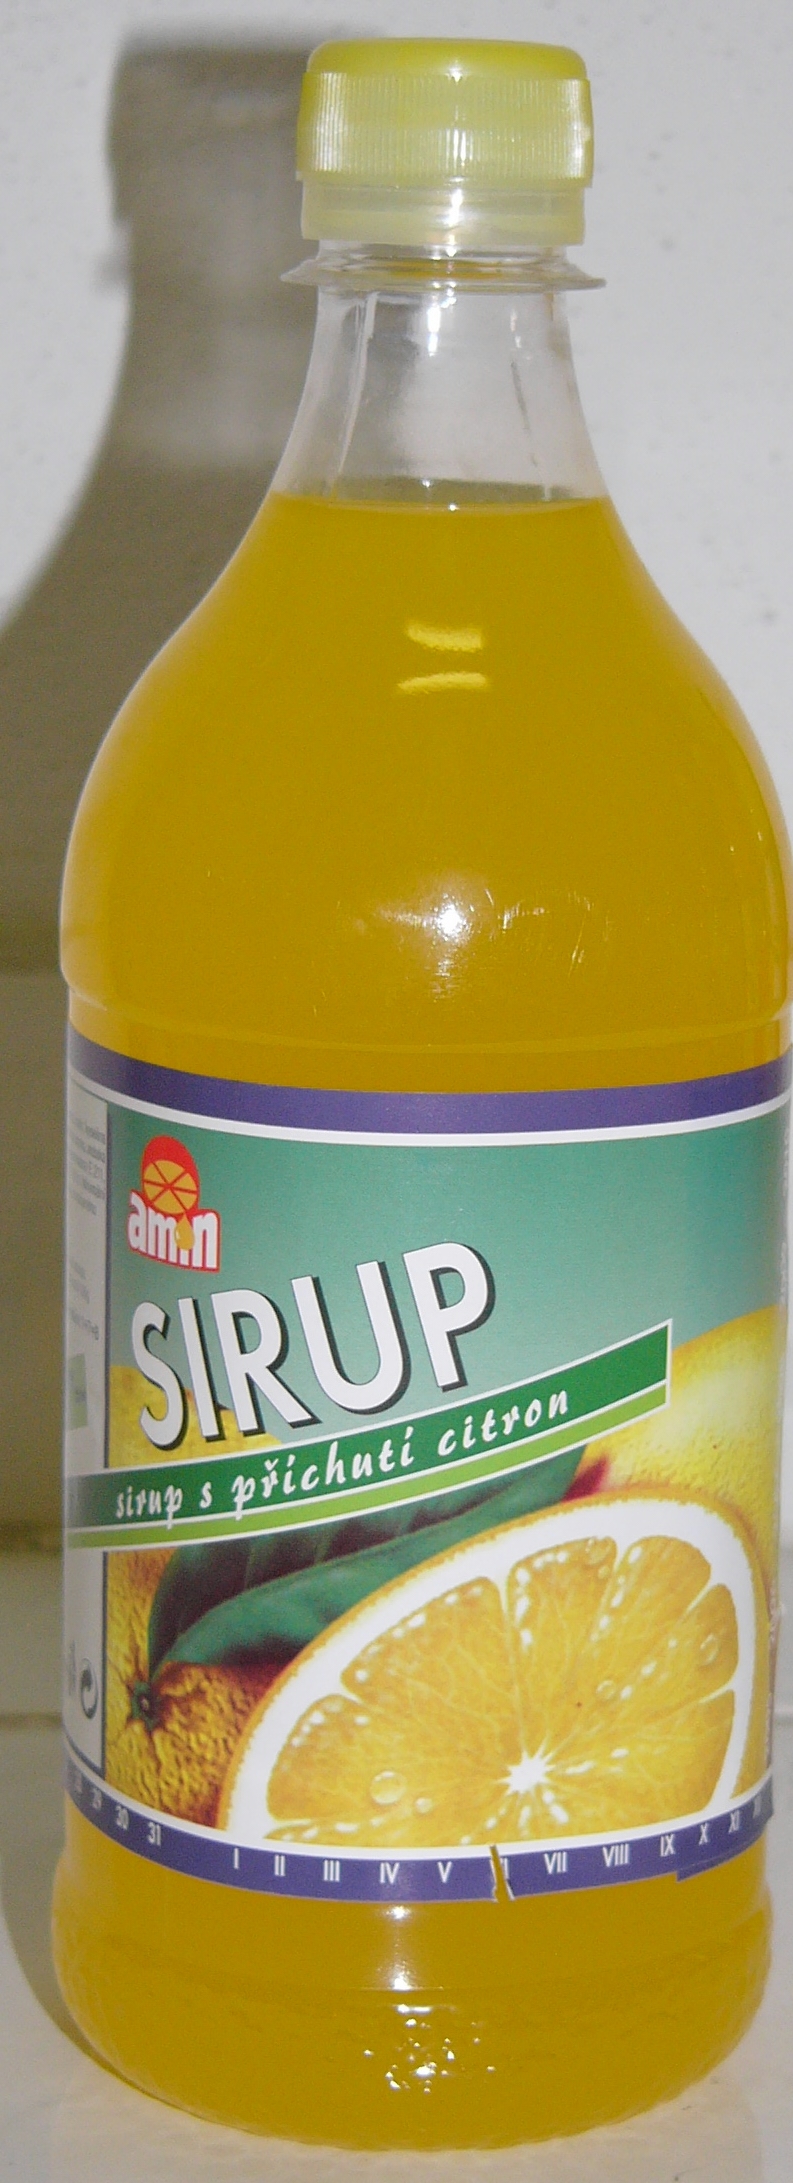 sirupC 0,7 citron.jpg